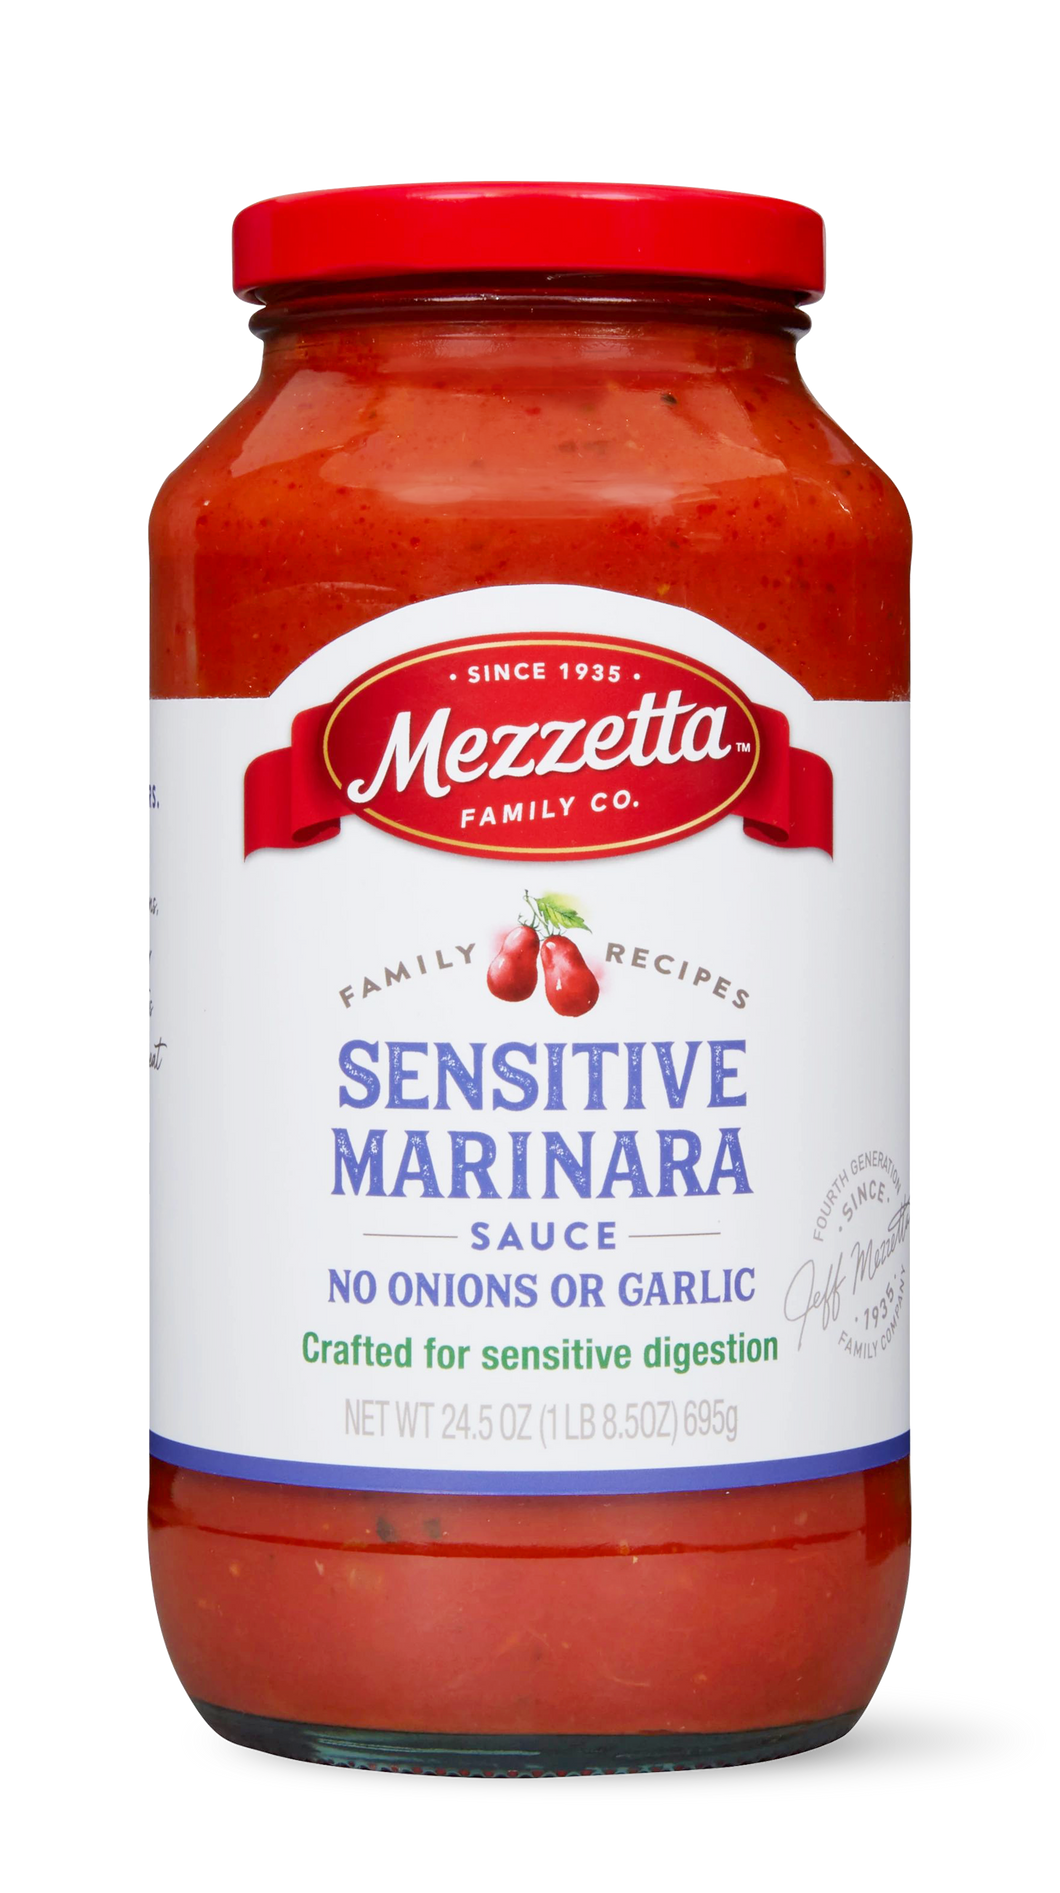 Family Recipes Sensitive Marinara Sauce